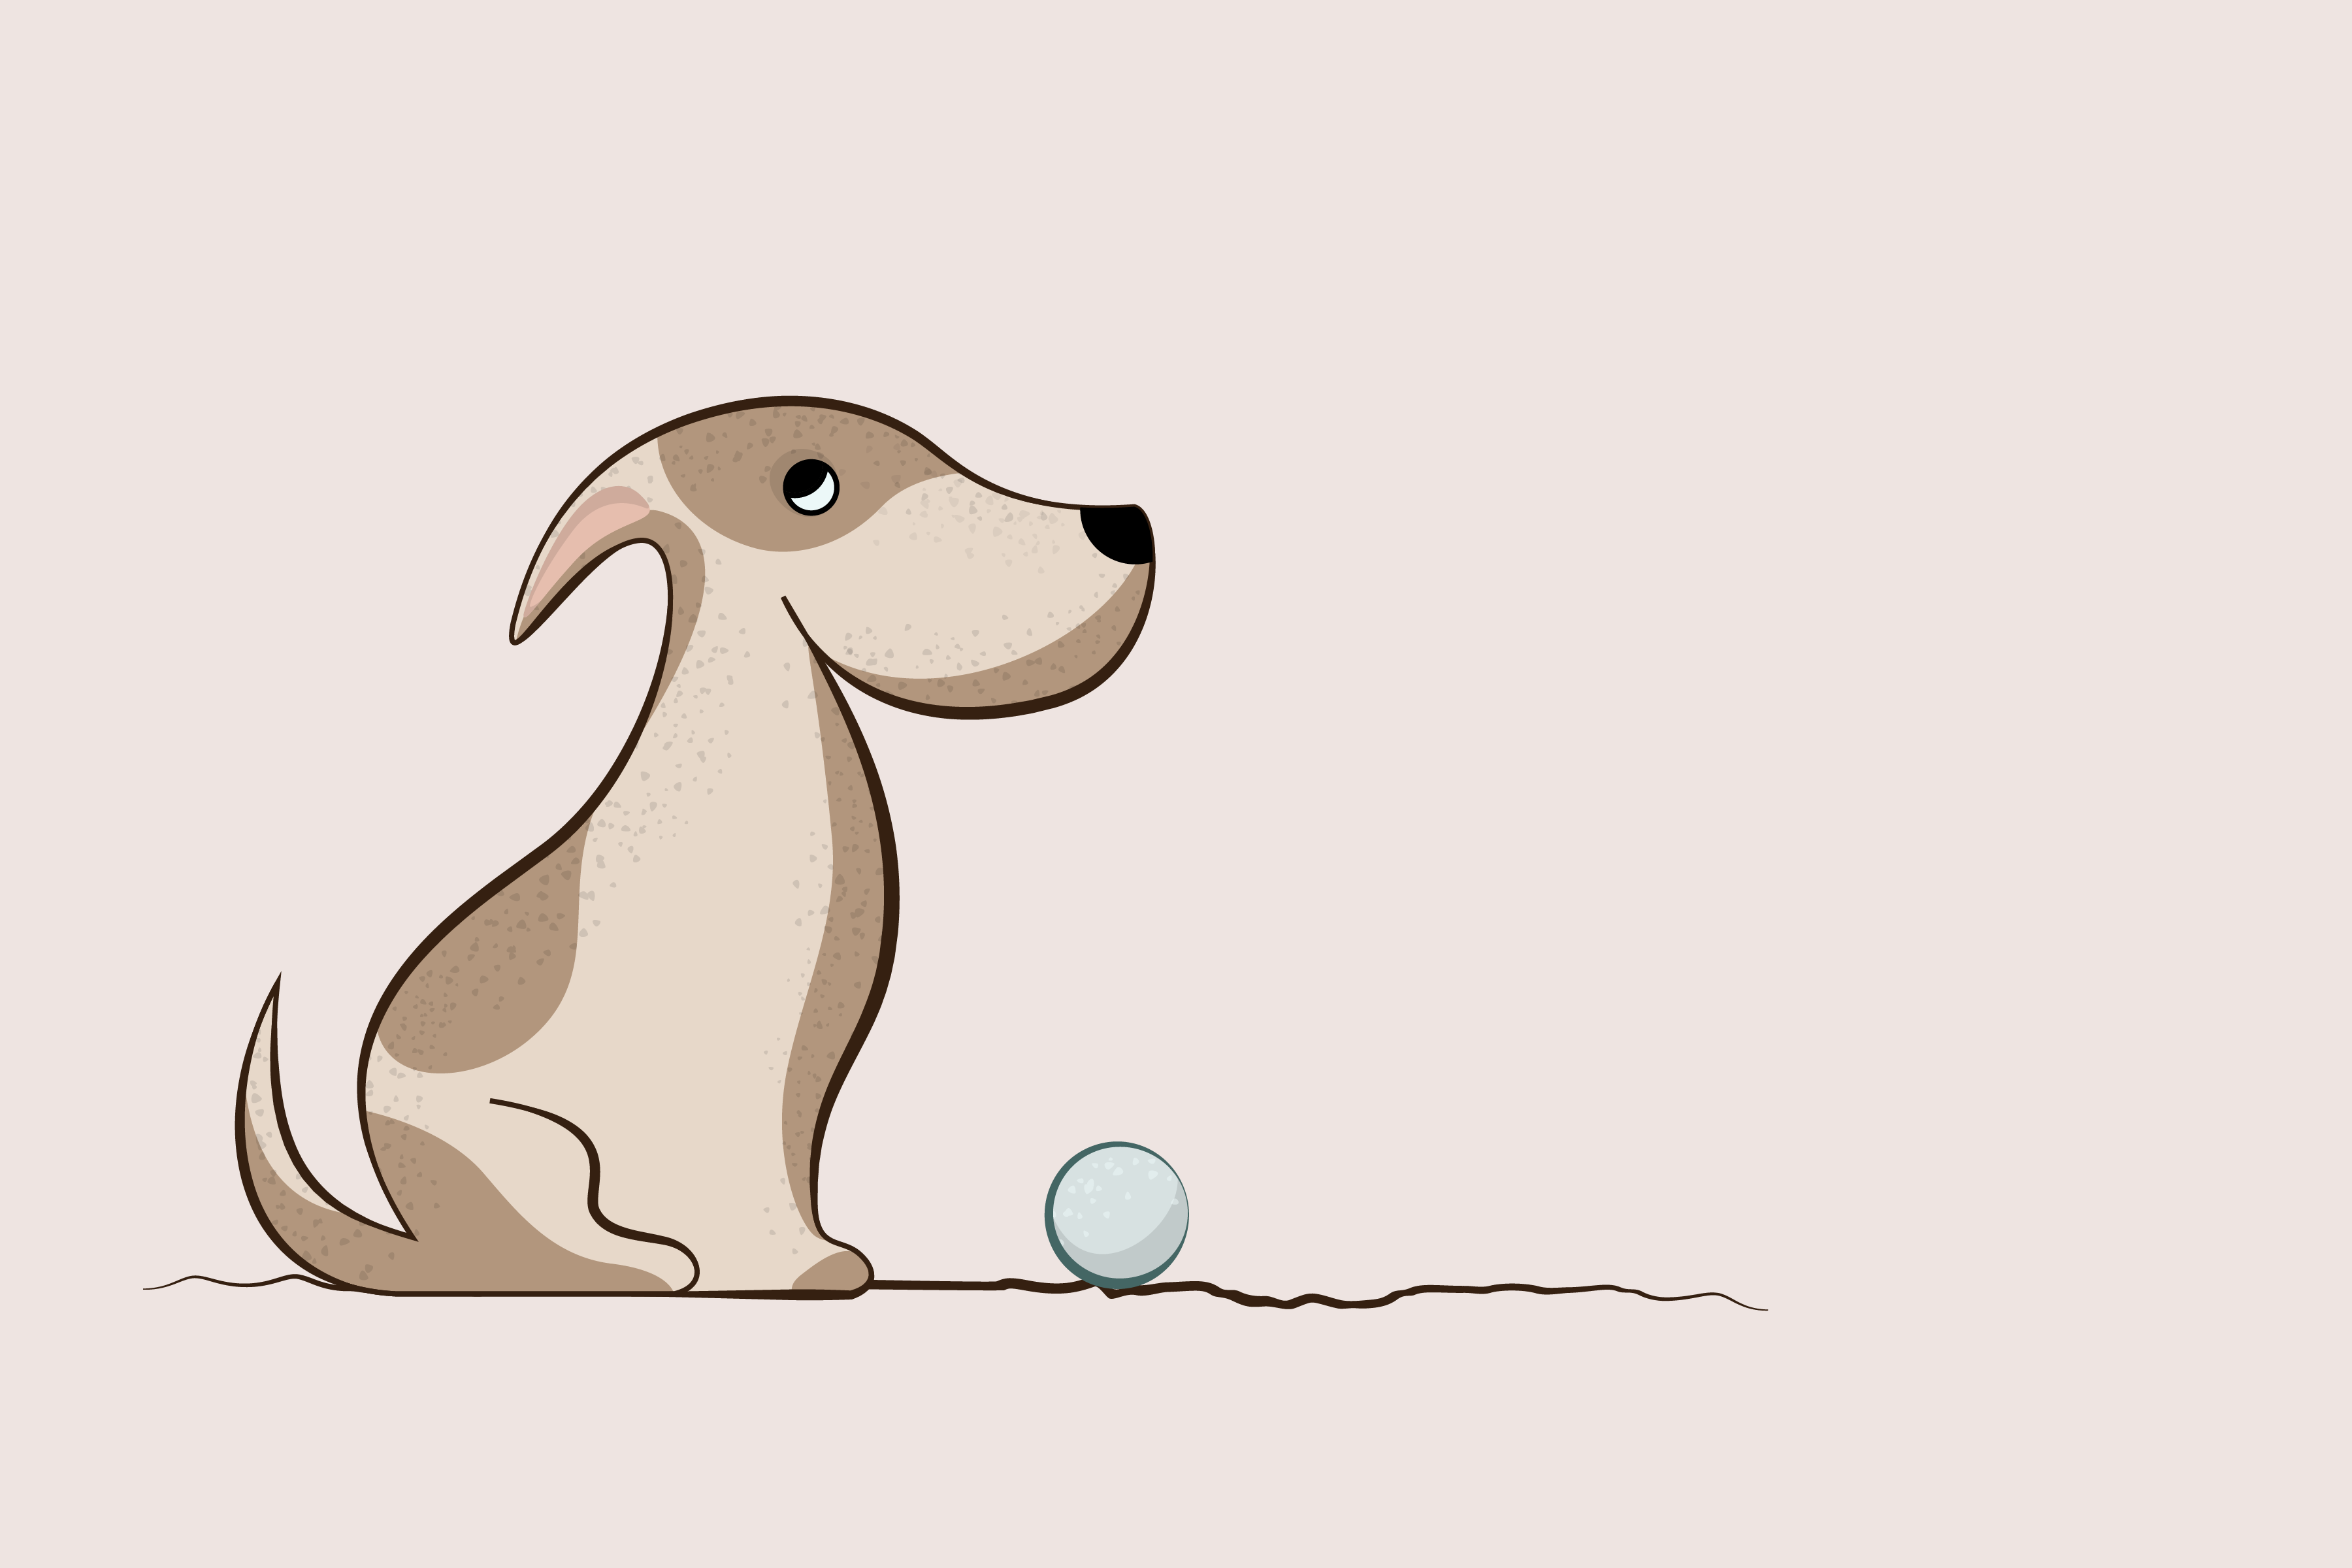 Playful dog illustration by Xavier Wendling